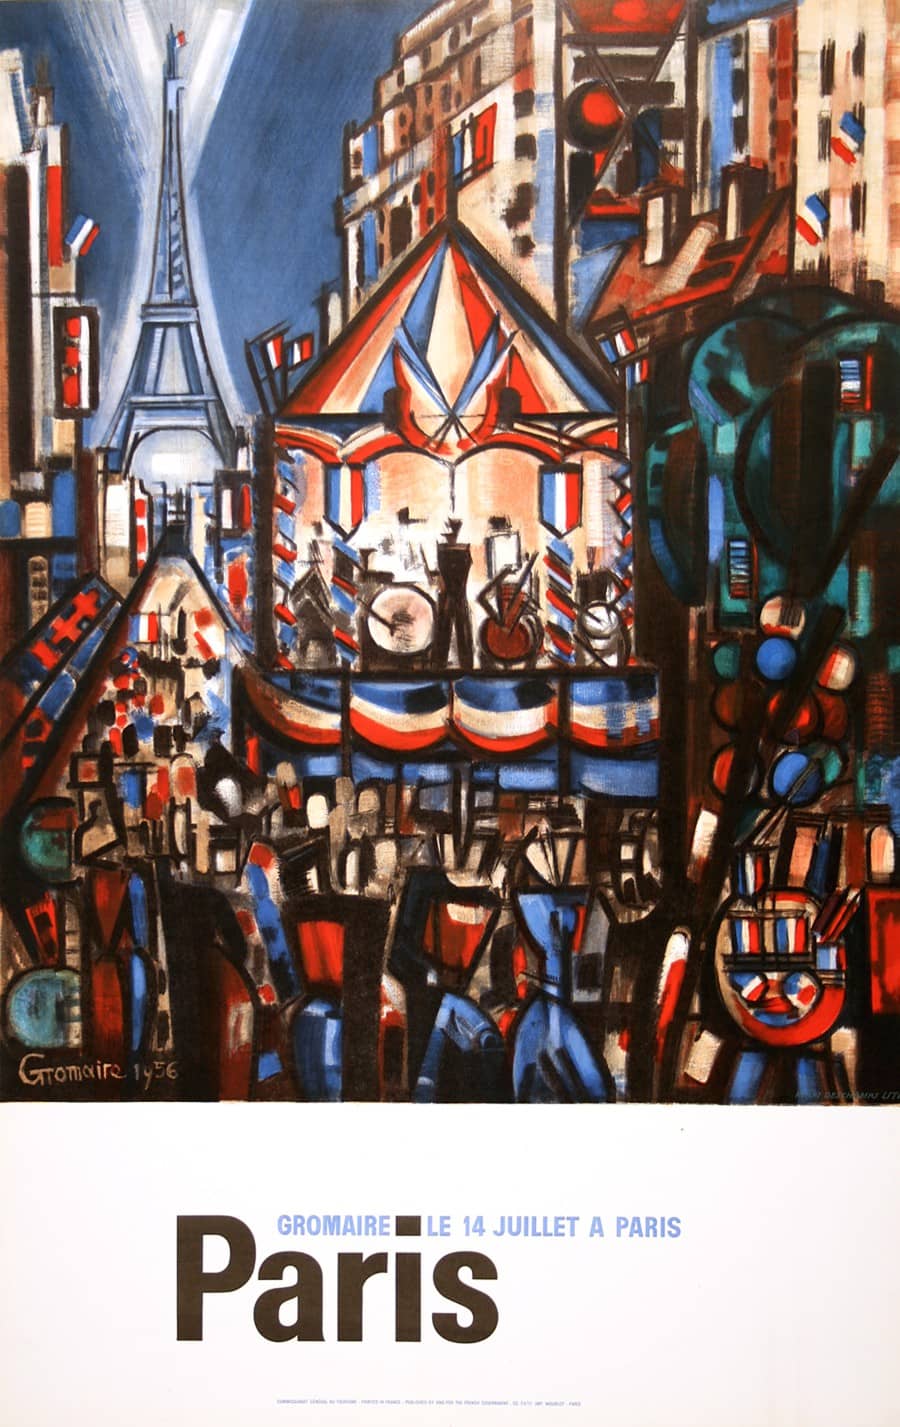 Original Paris Bastille Day Celebration Poster by Gromaire 1956